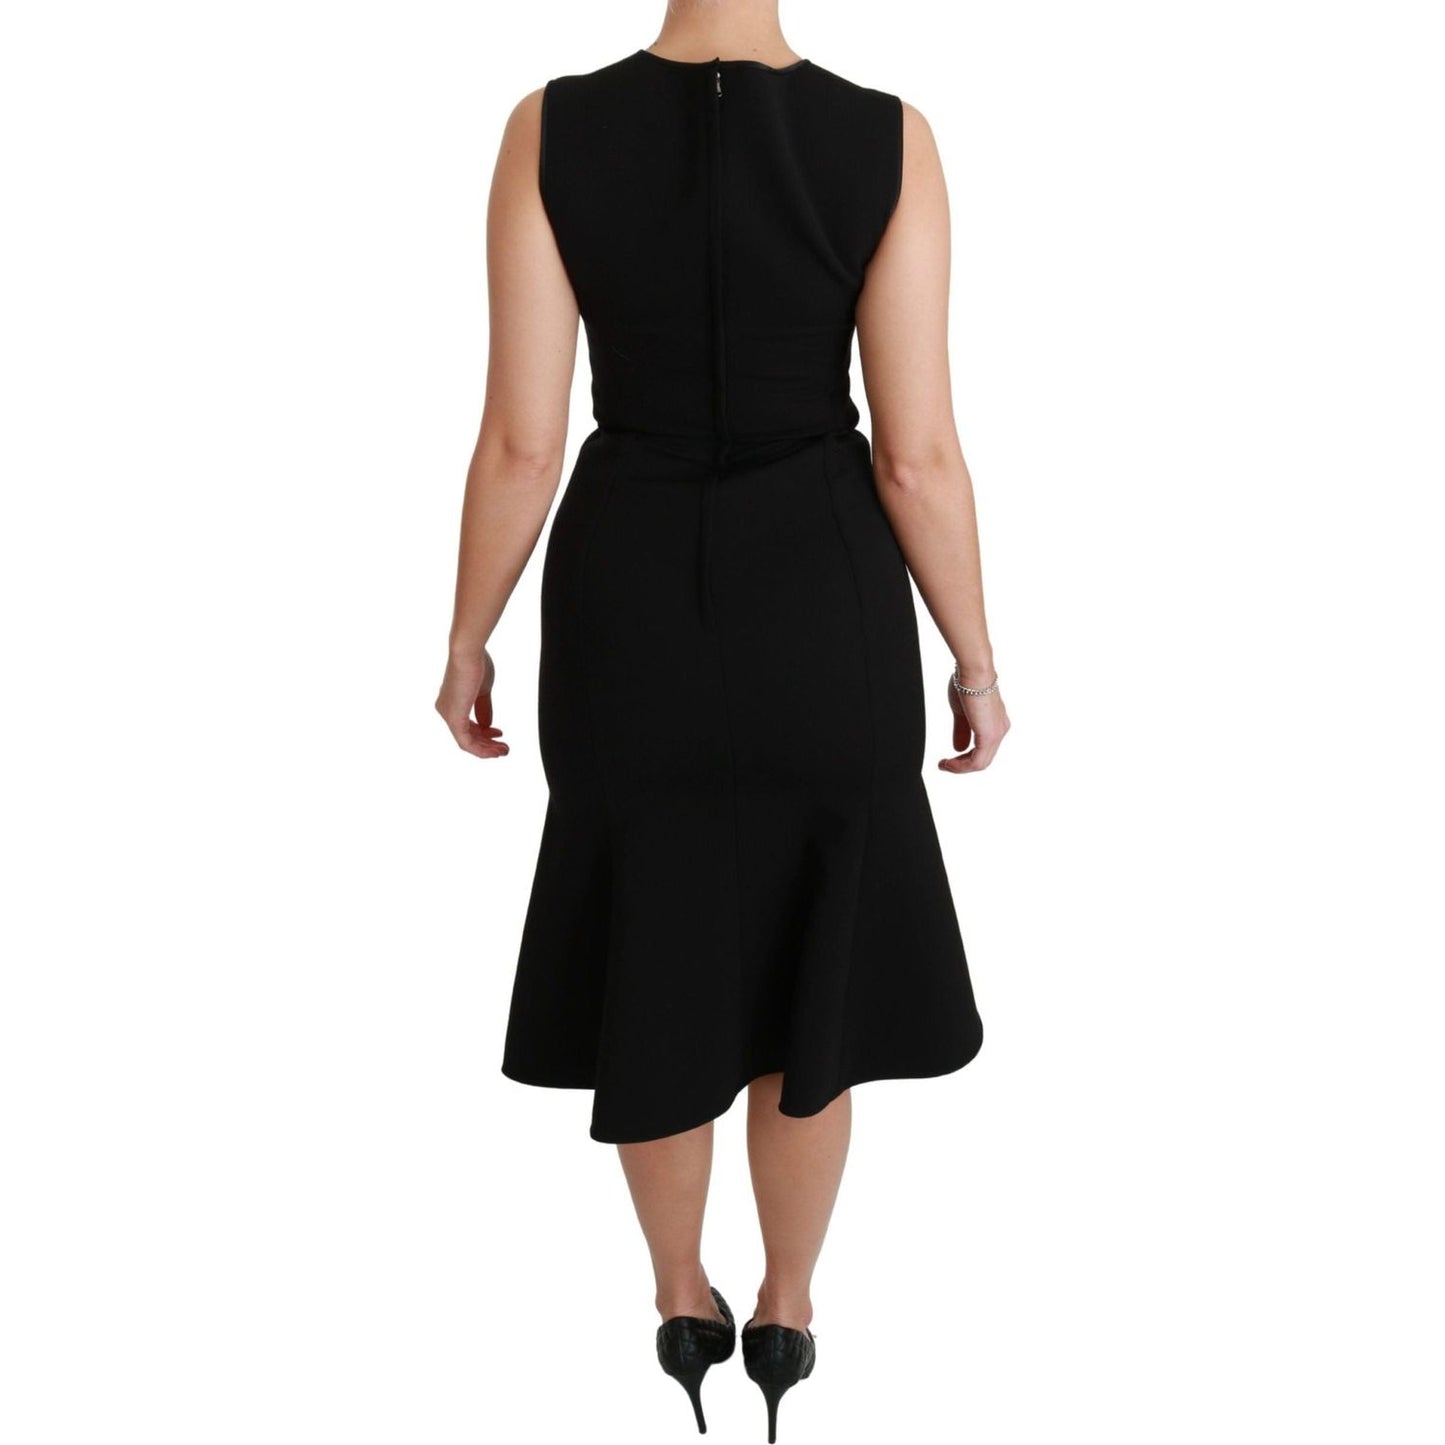 Dolce & Gabbana Elegant Black Fit Flare Wool Blend Dress black-fit-flare-wool-stretch-sheath-dress WOMAN DRESSES IMG_6967-scaled-a3654d90-a47.jpg